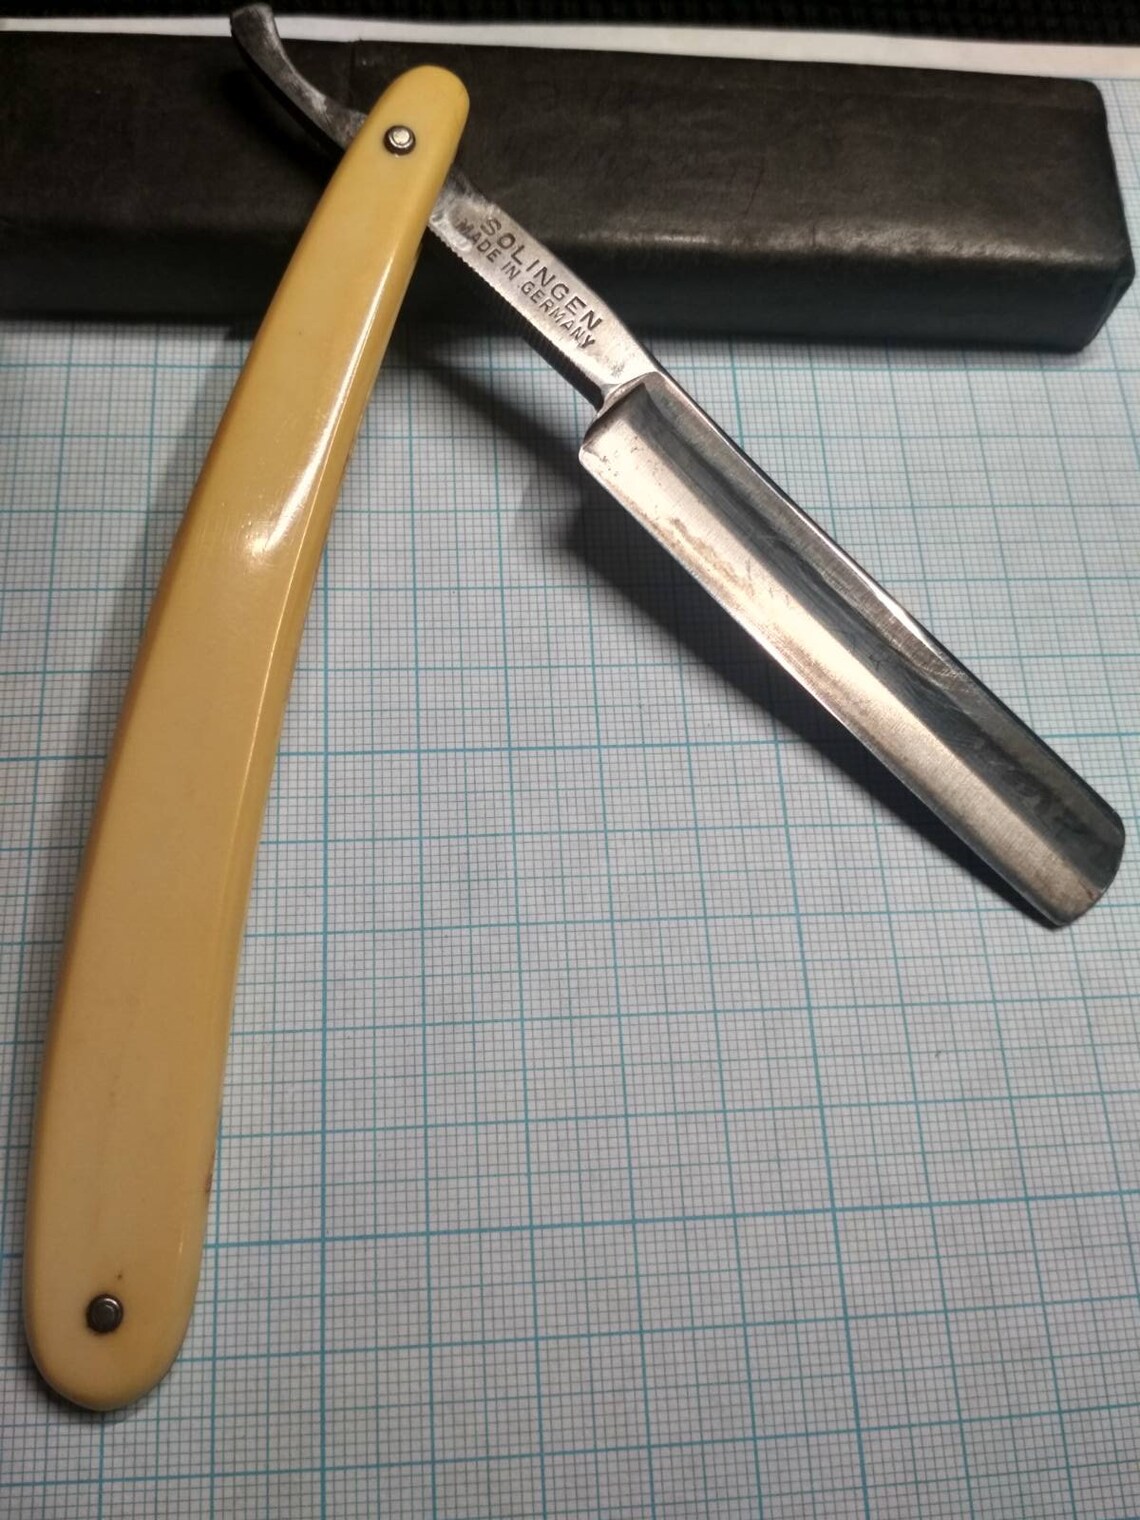 Straight razor kobar solingen made in Germany | Etsy